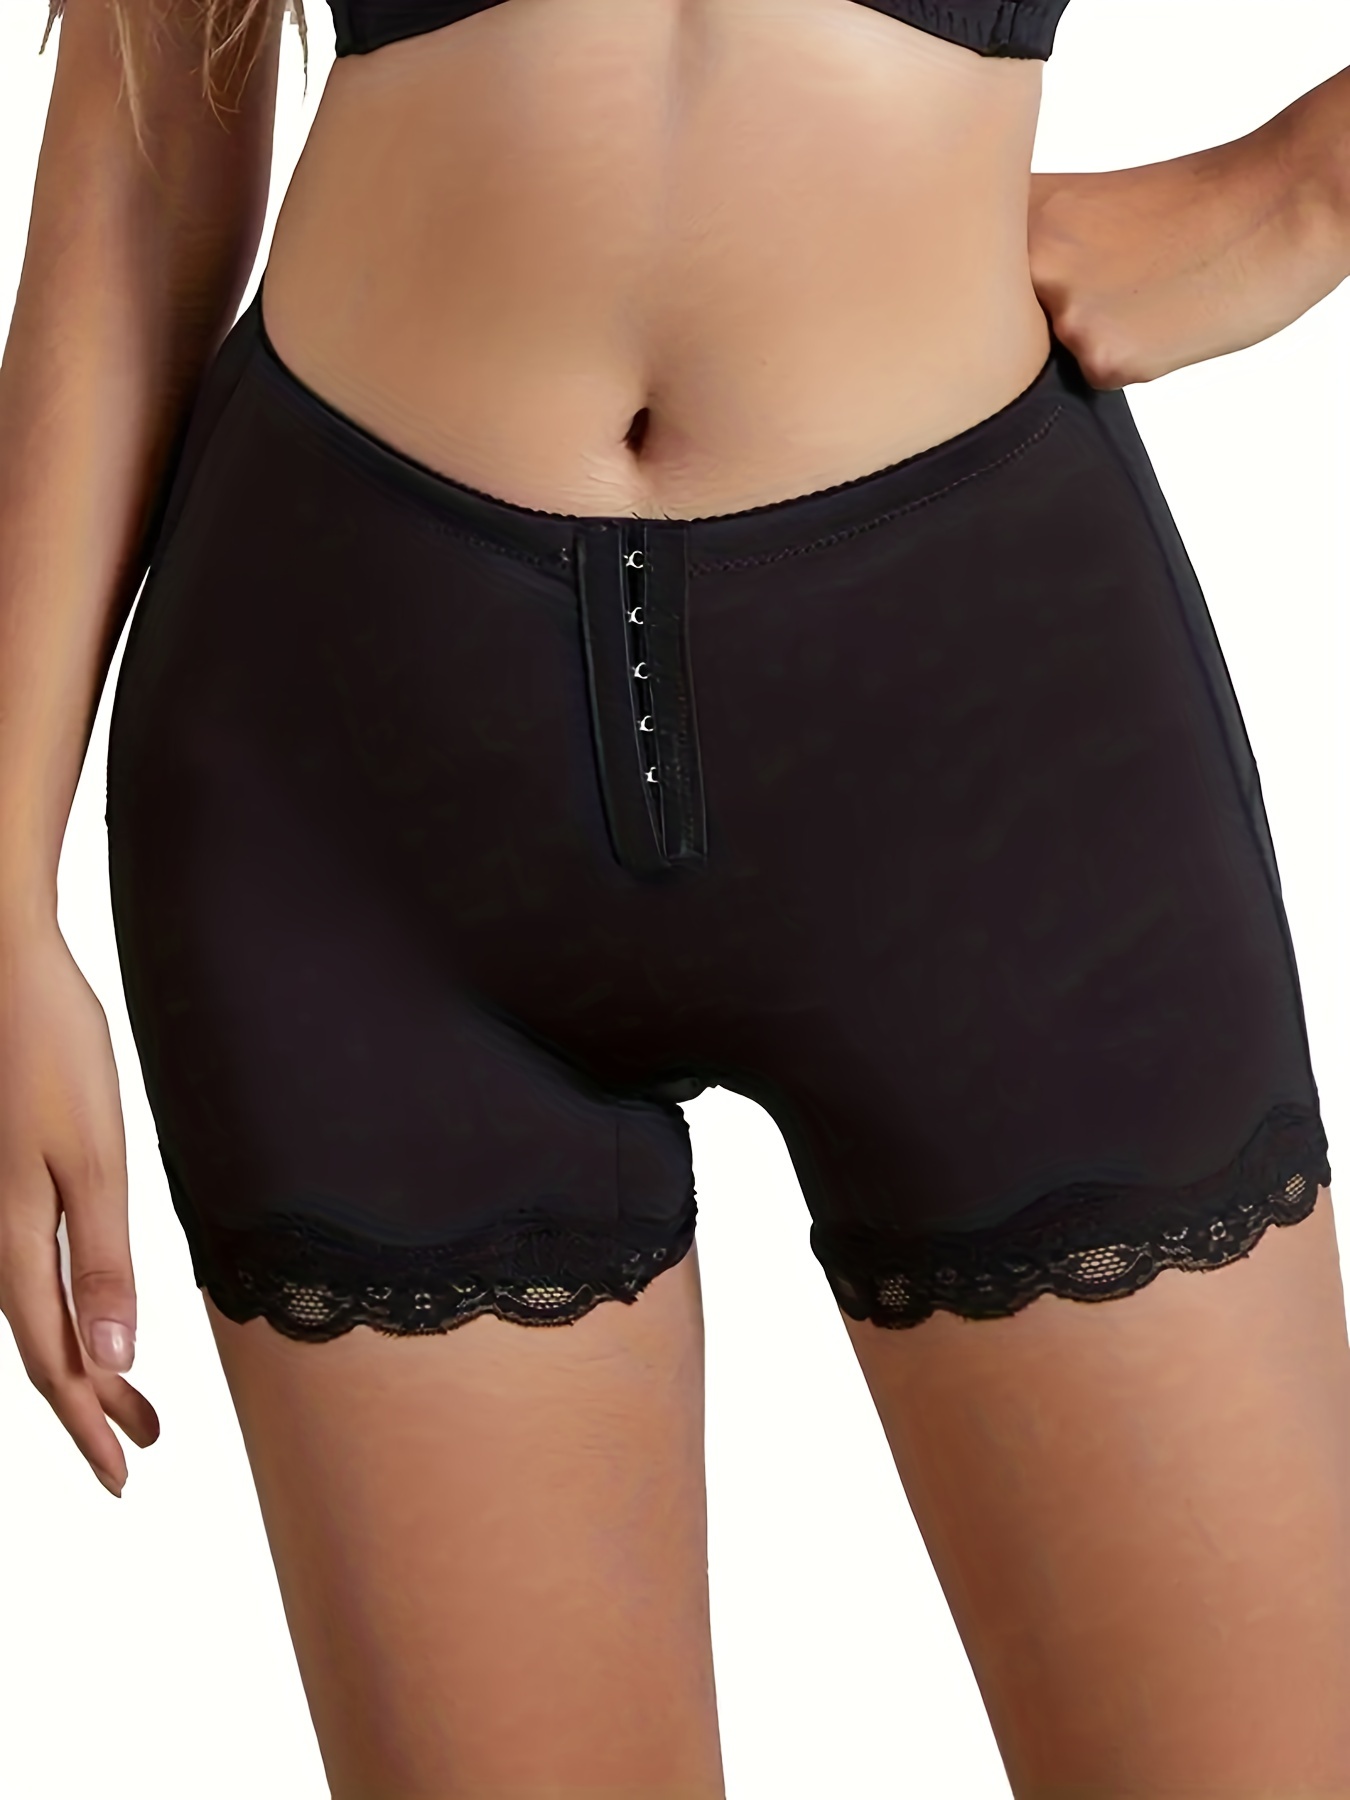 XZHGS Graphic Prints Winter Boyshort Womens Lace Panties Female Thong Thin  Strap Pants Low Waist Panties Workout Bodysuit 